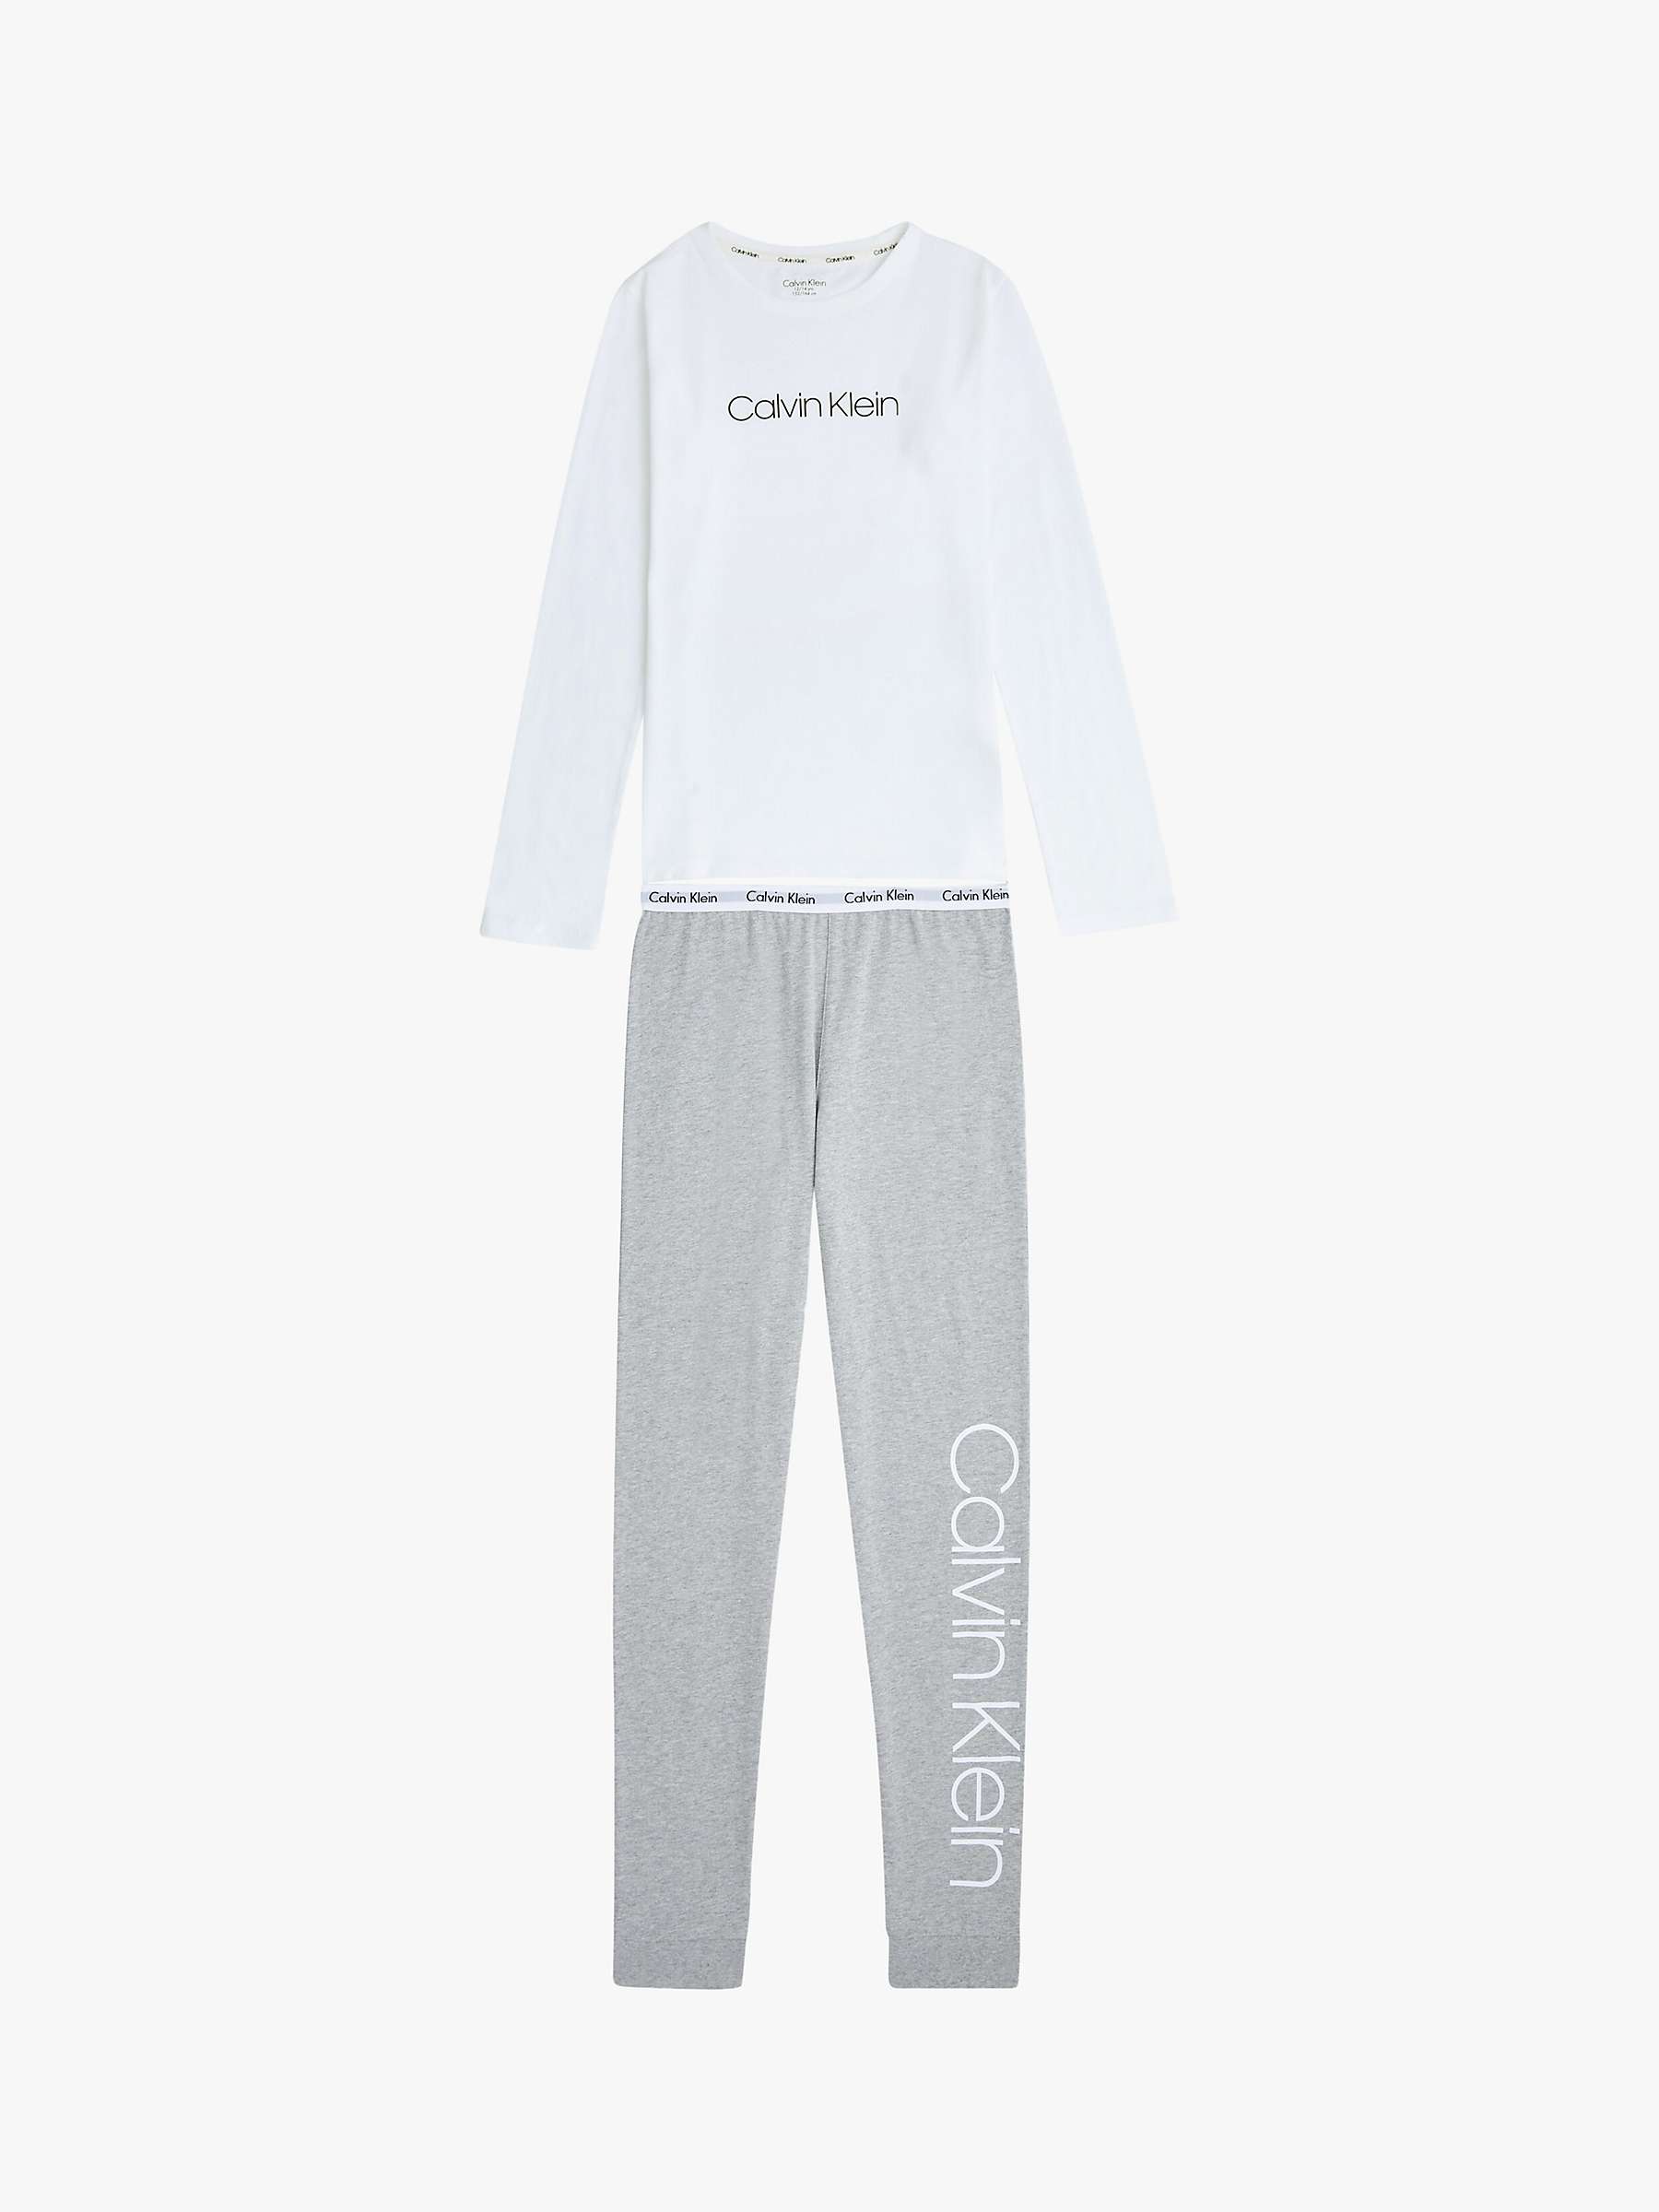 Multicolored XS Calvin Klein Floral pajama with bag discount 76% WOMEN FASHION Underwear & Nightwear Pyjama 